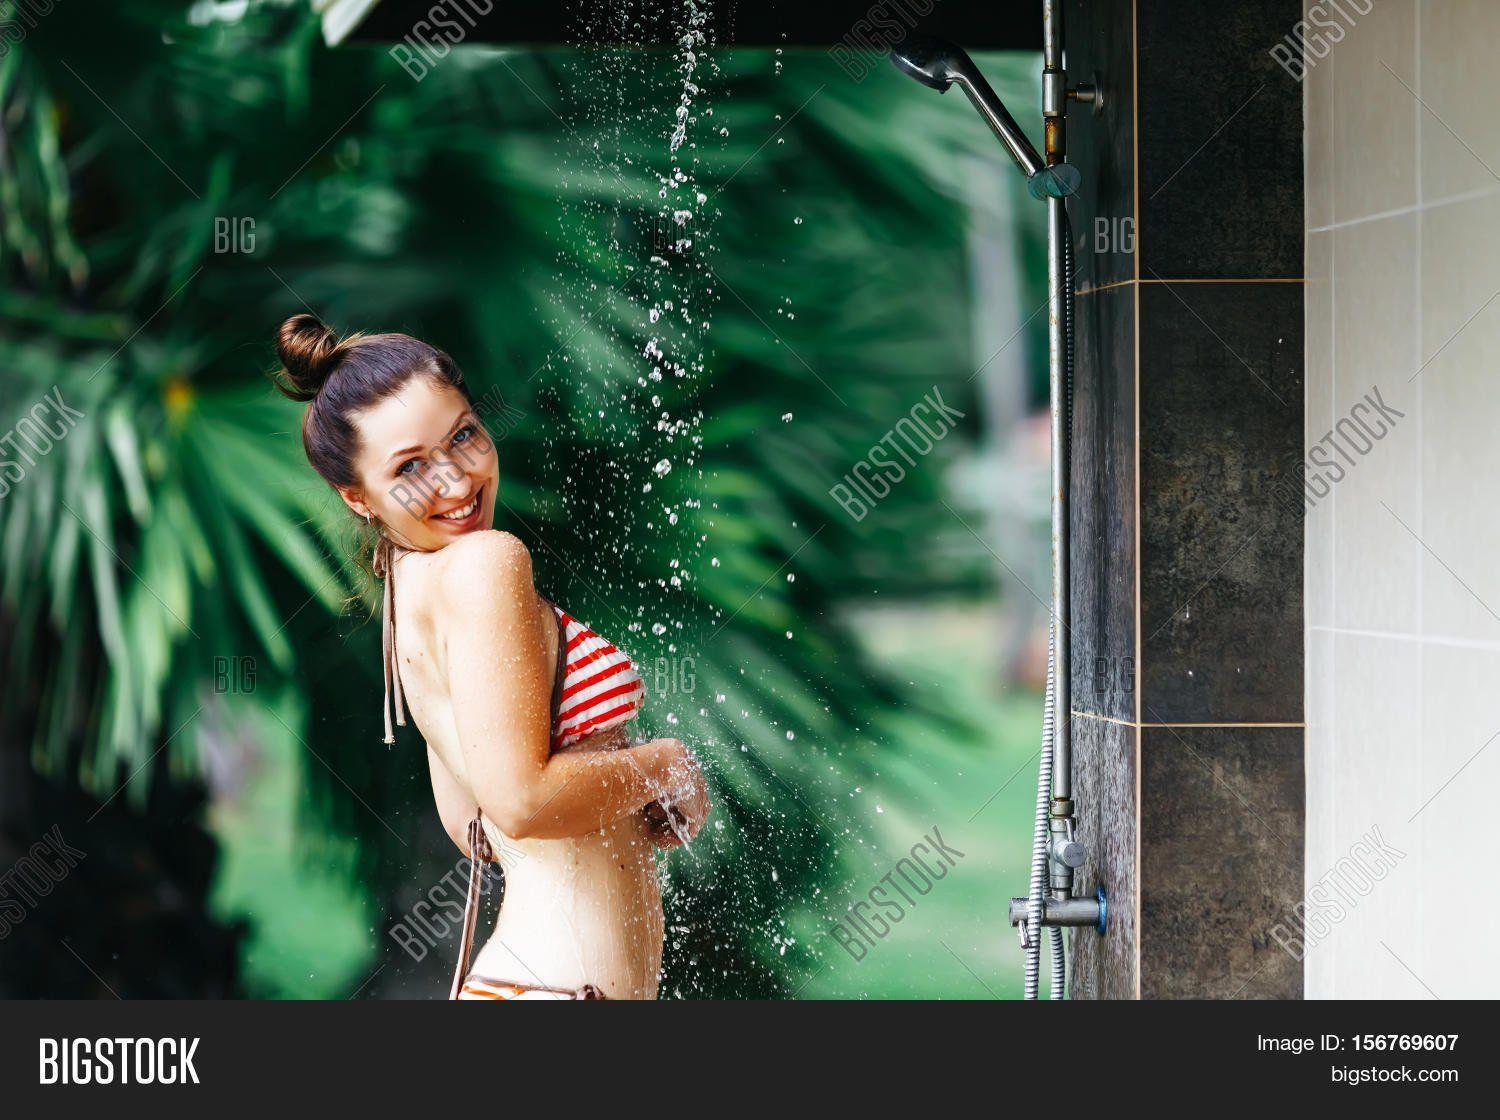 Sexy girls taking shower